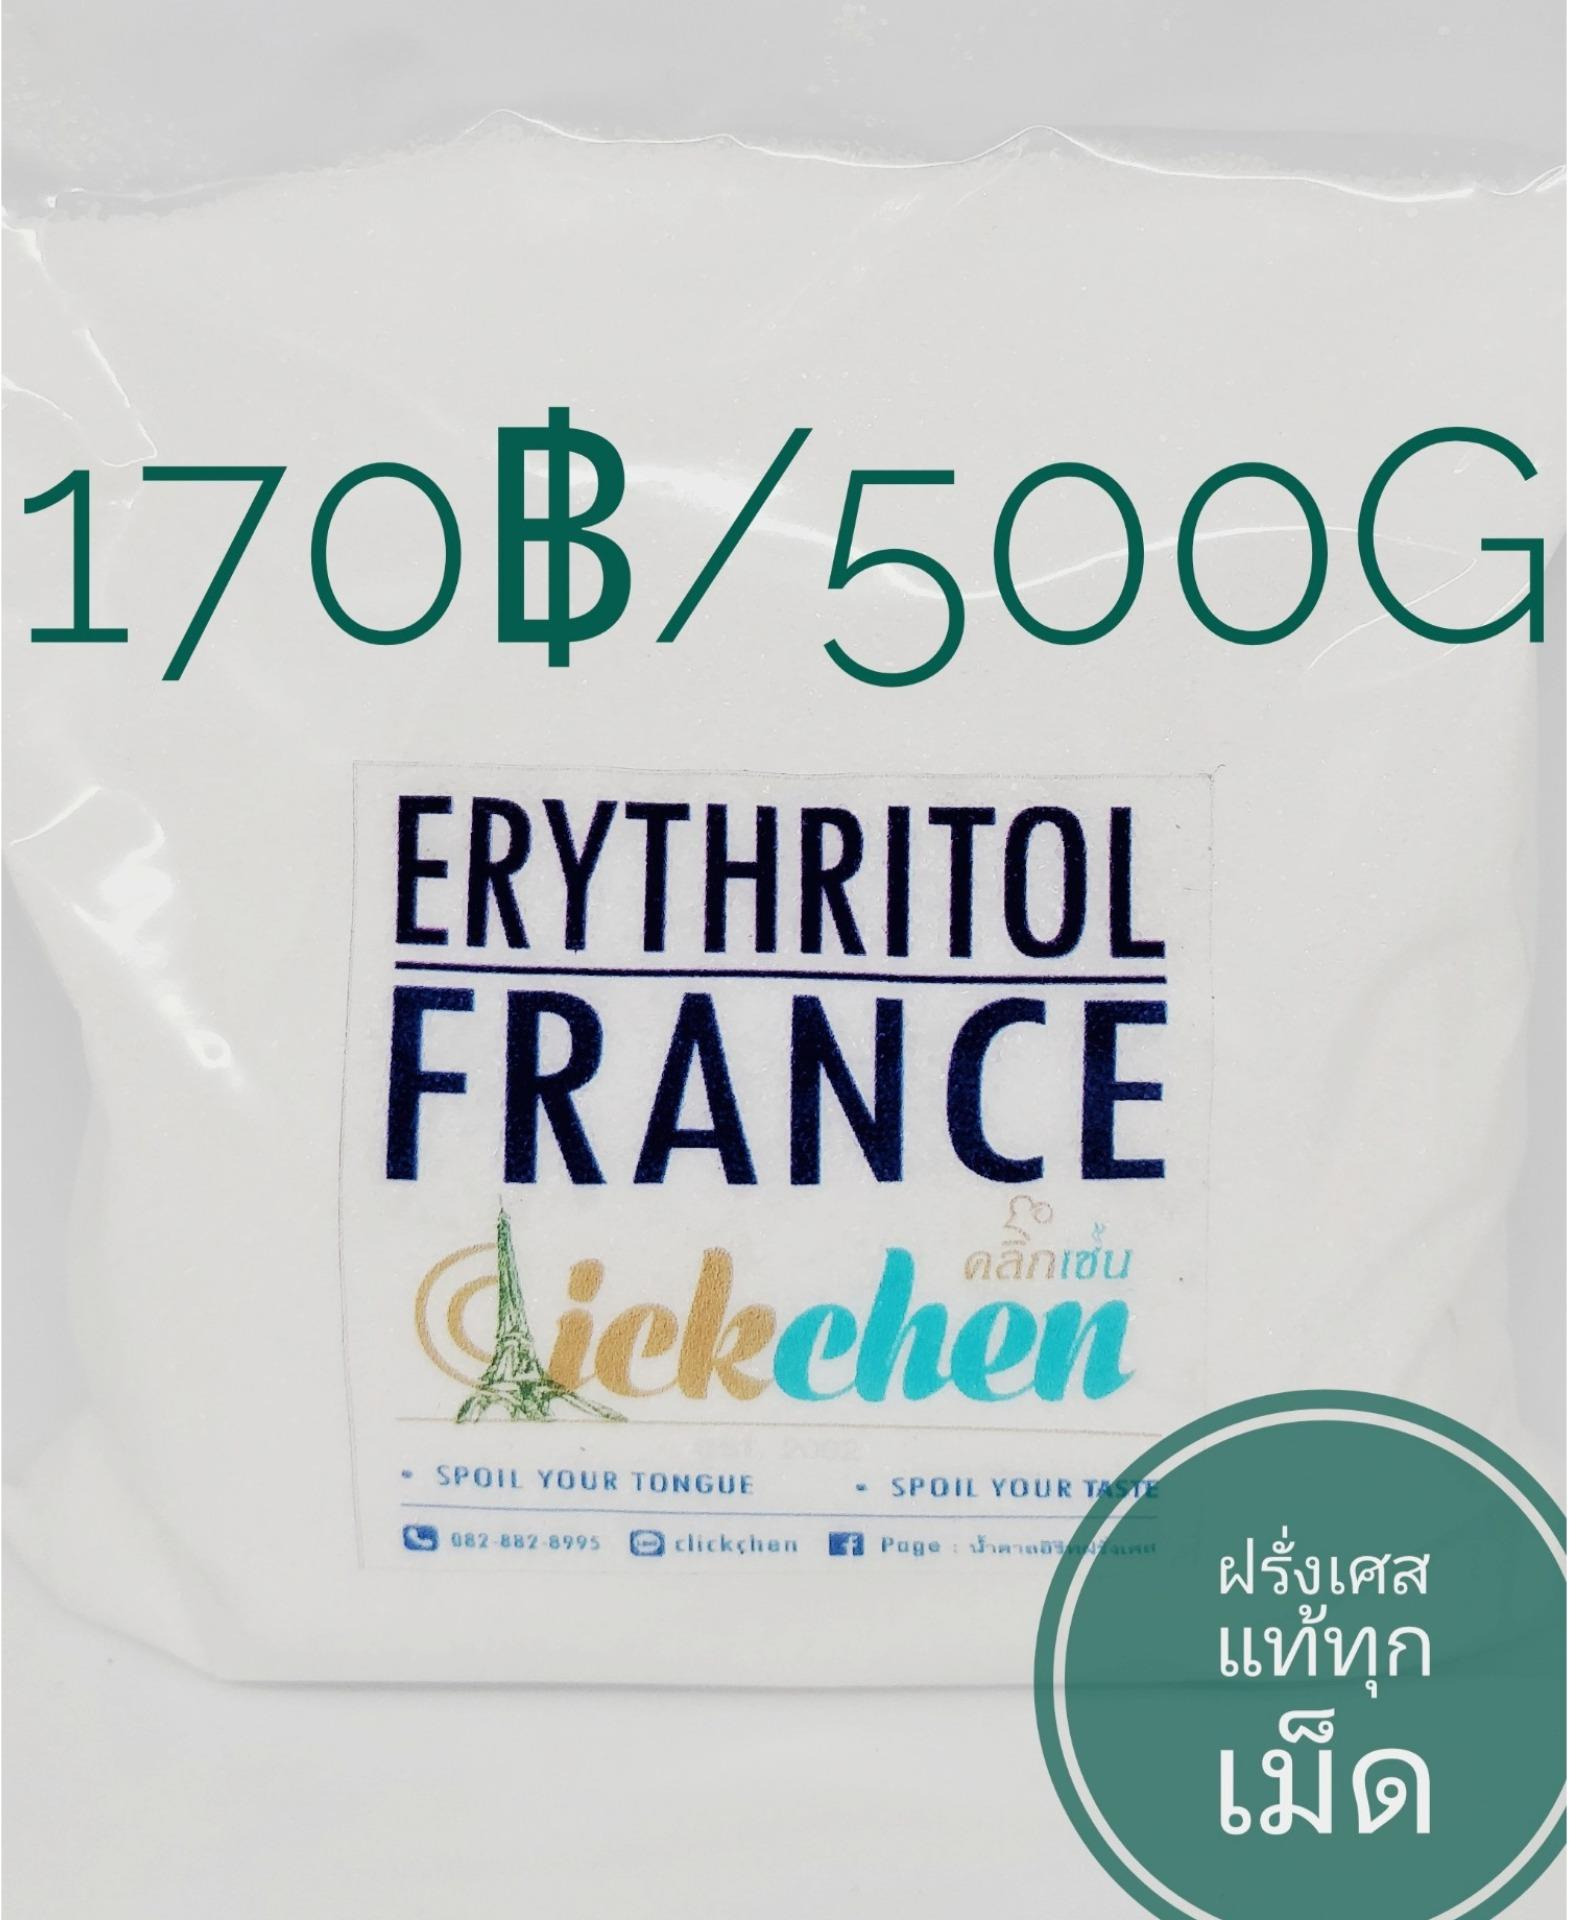 Erythritol France 500g / 175B NON-GMO อิริ​ทริ​ทอล​ ฝรั่งเศส​ นำ​เข้า​จาก​ฝรั่งเศส​แท้​100%